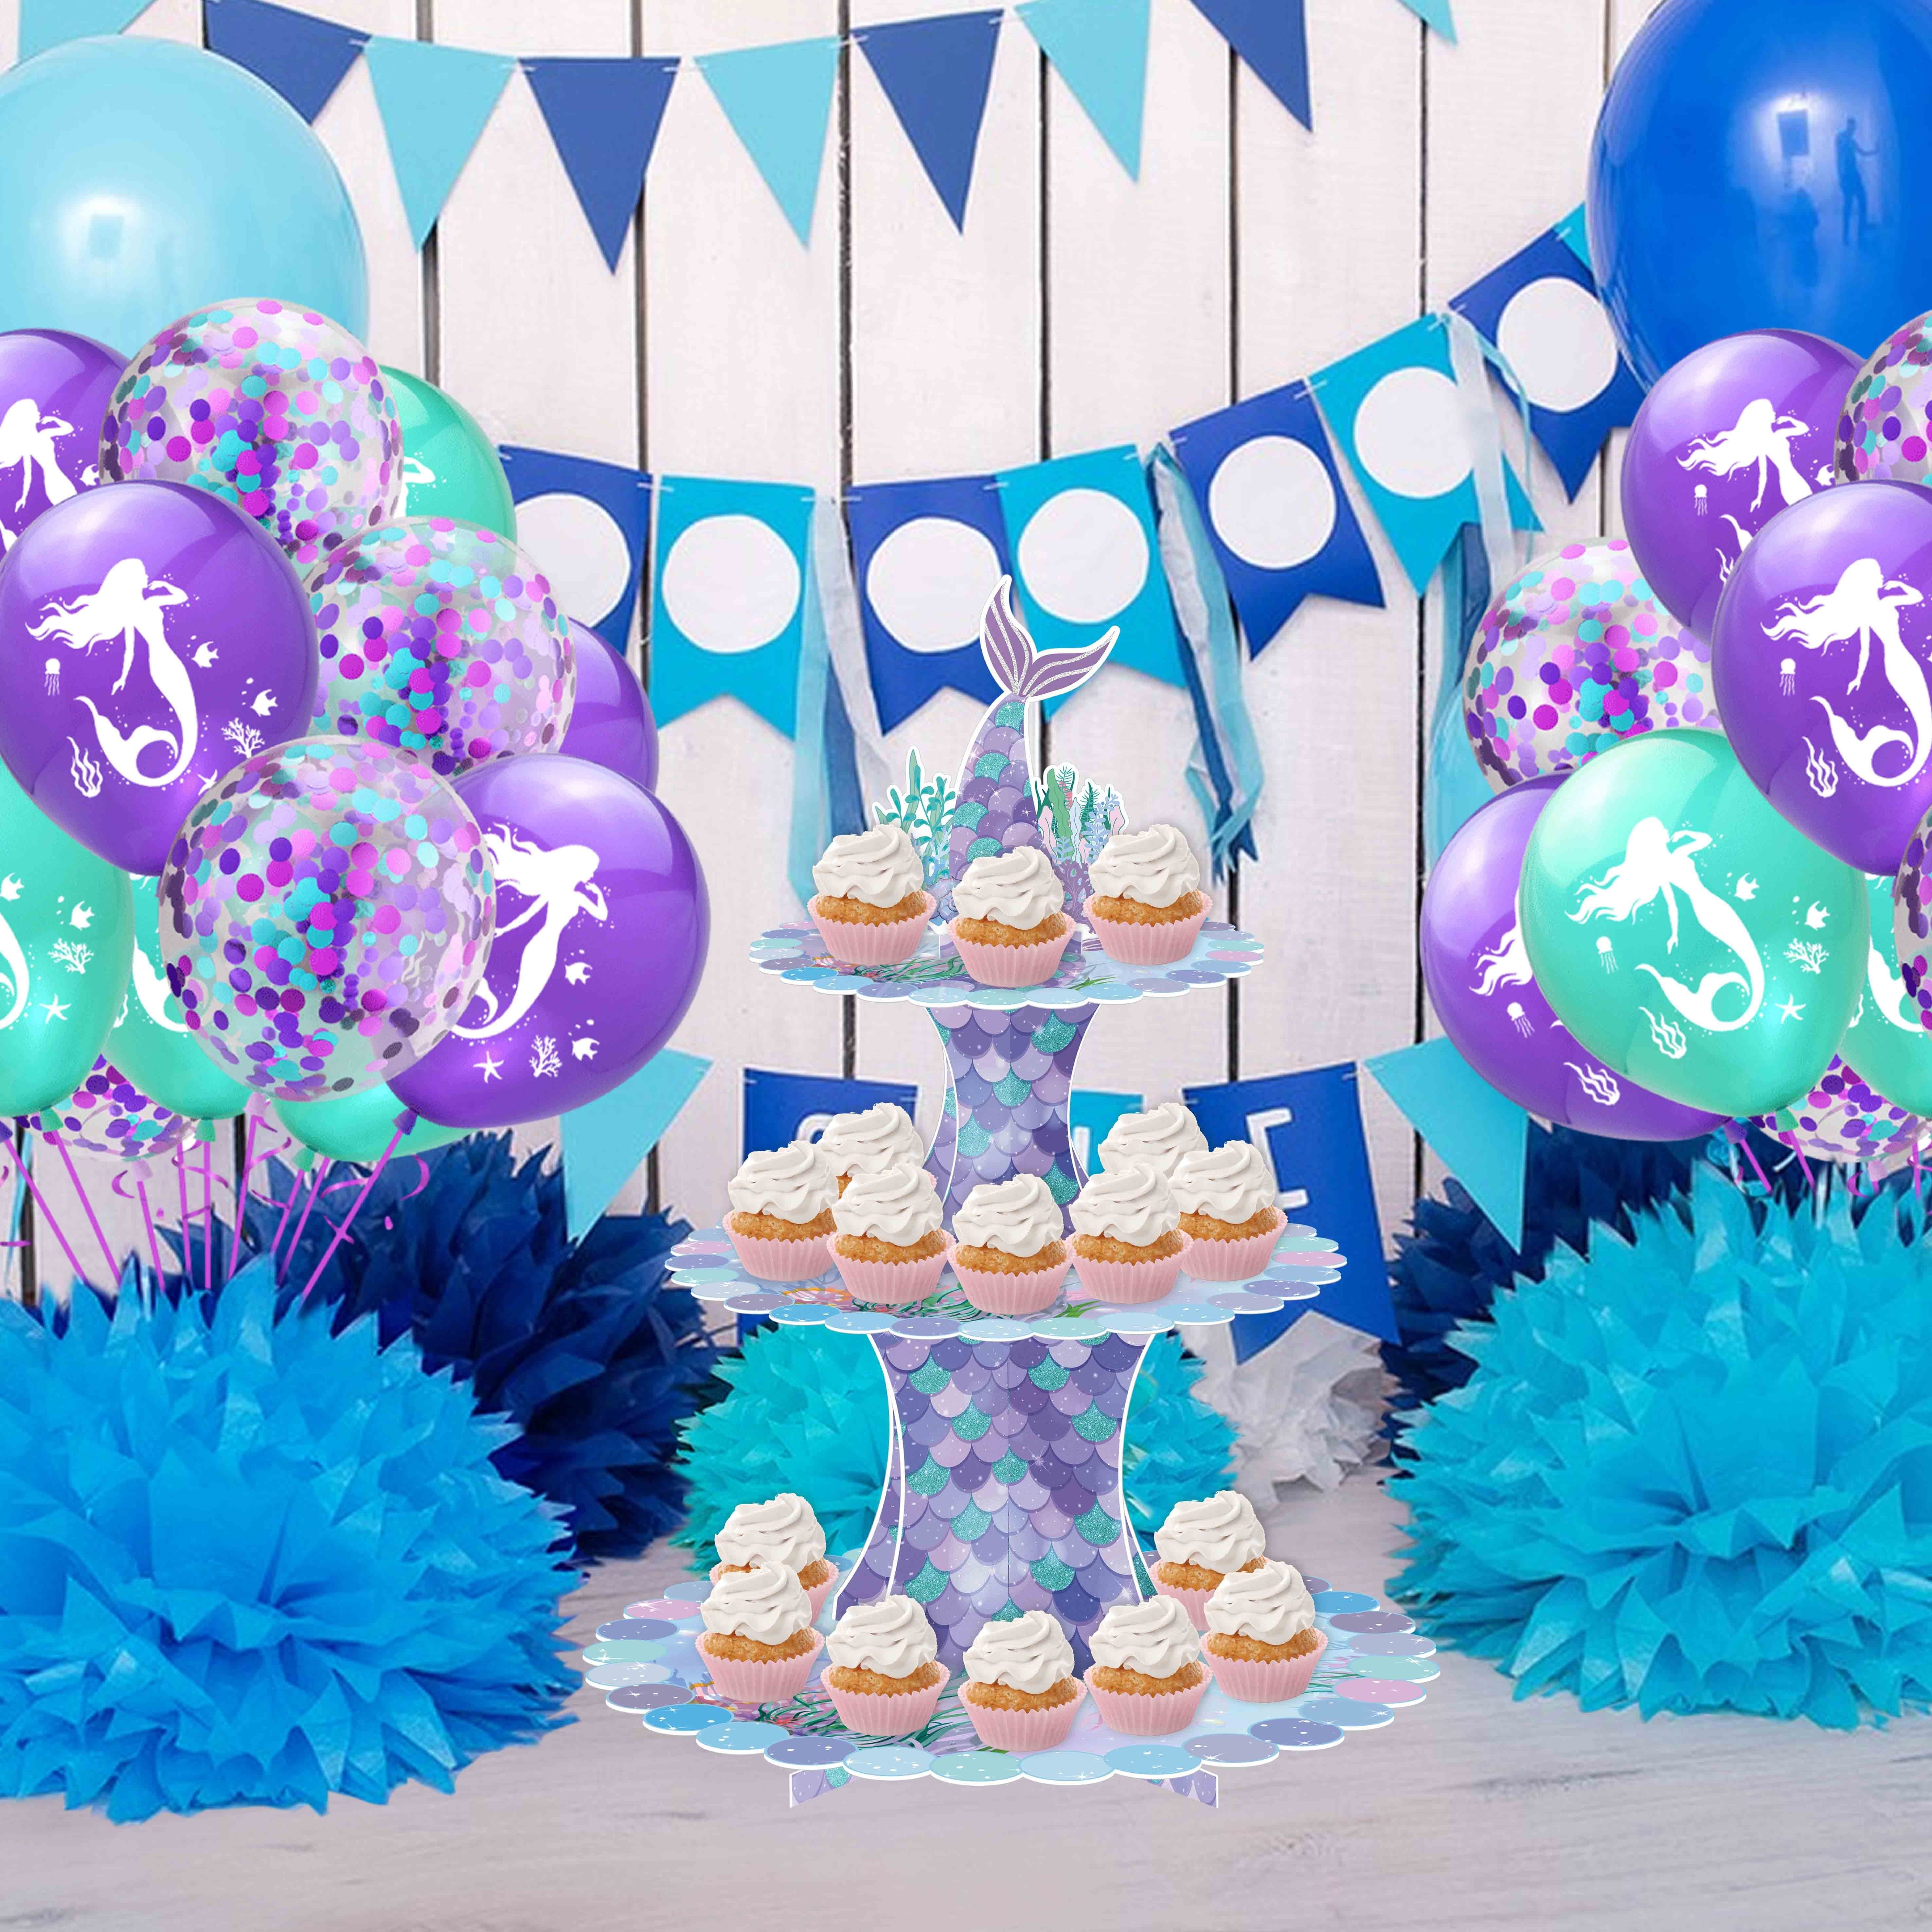 Mermaid Cupcake Stand Mermaid Theme Party Decoration 3-Tier